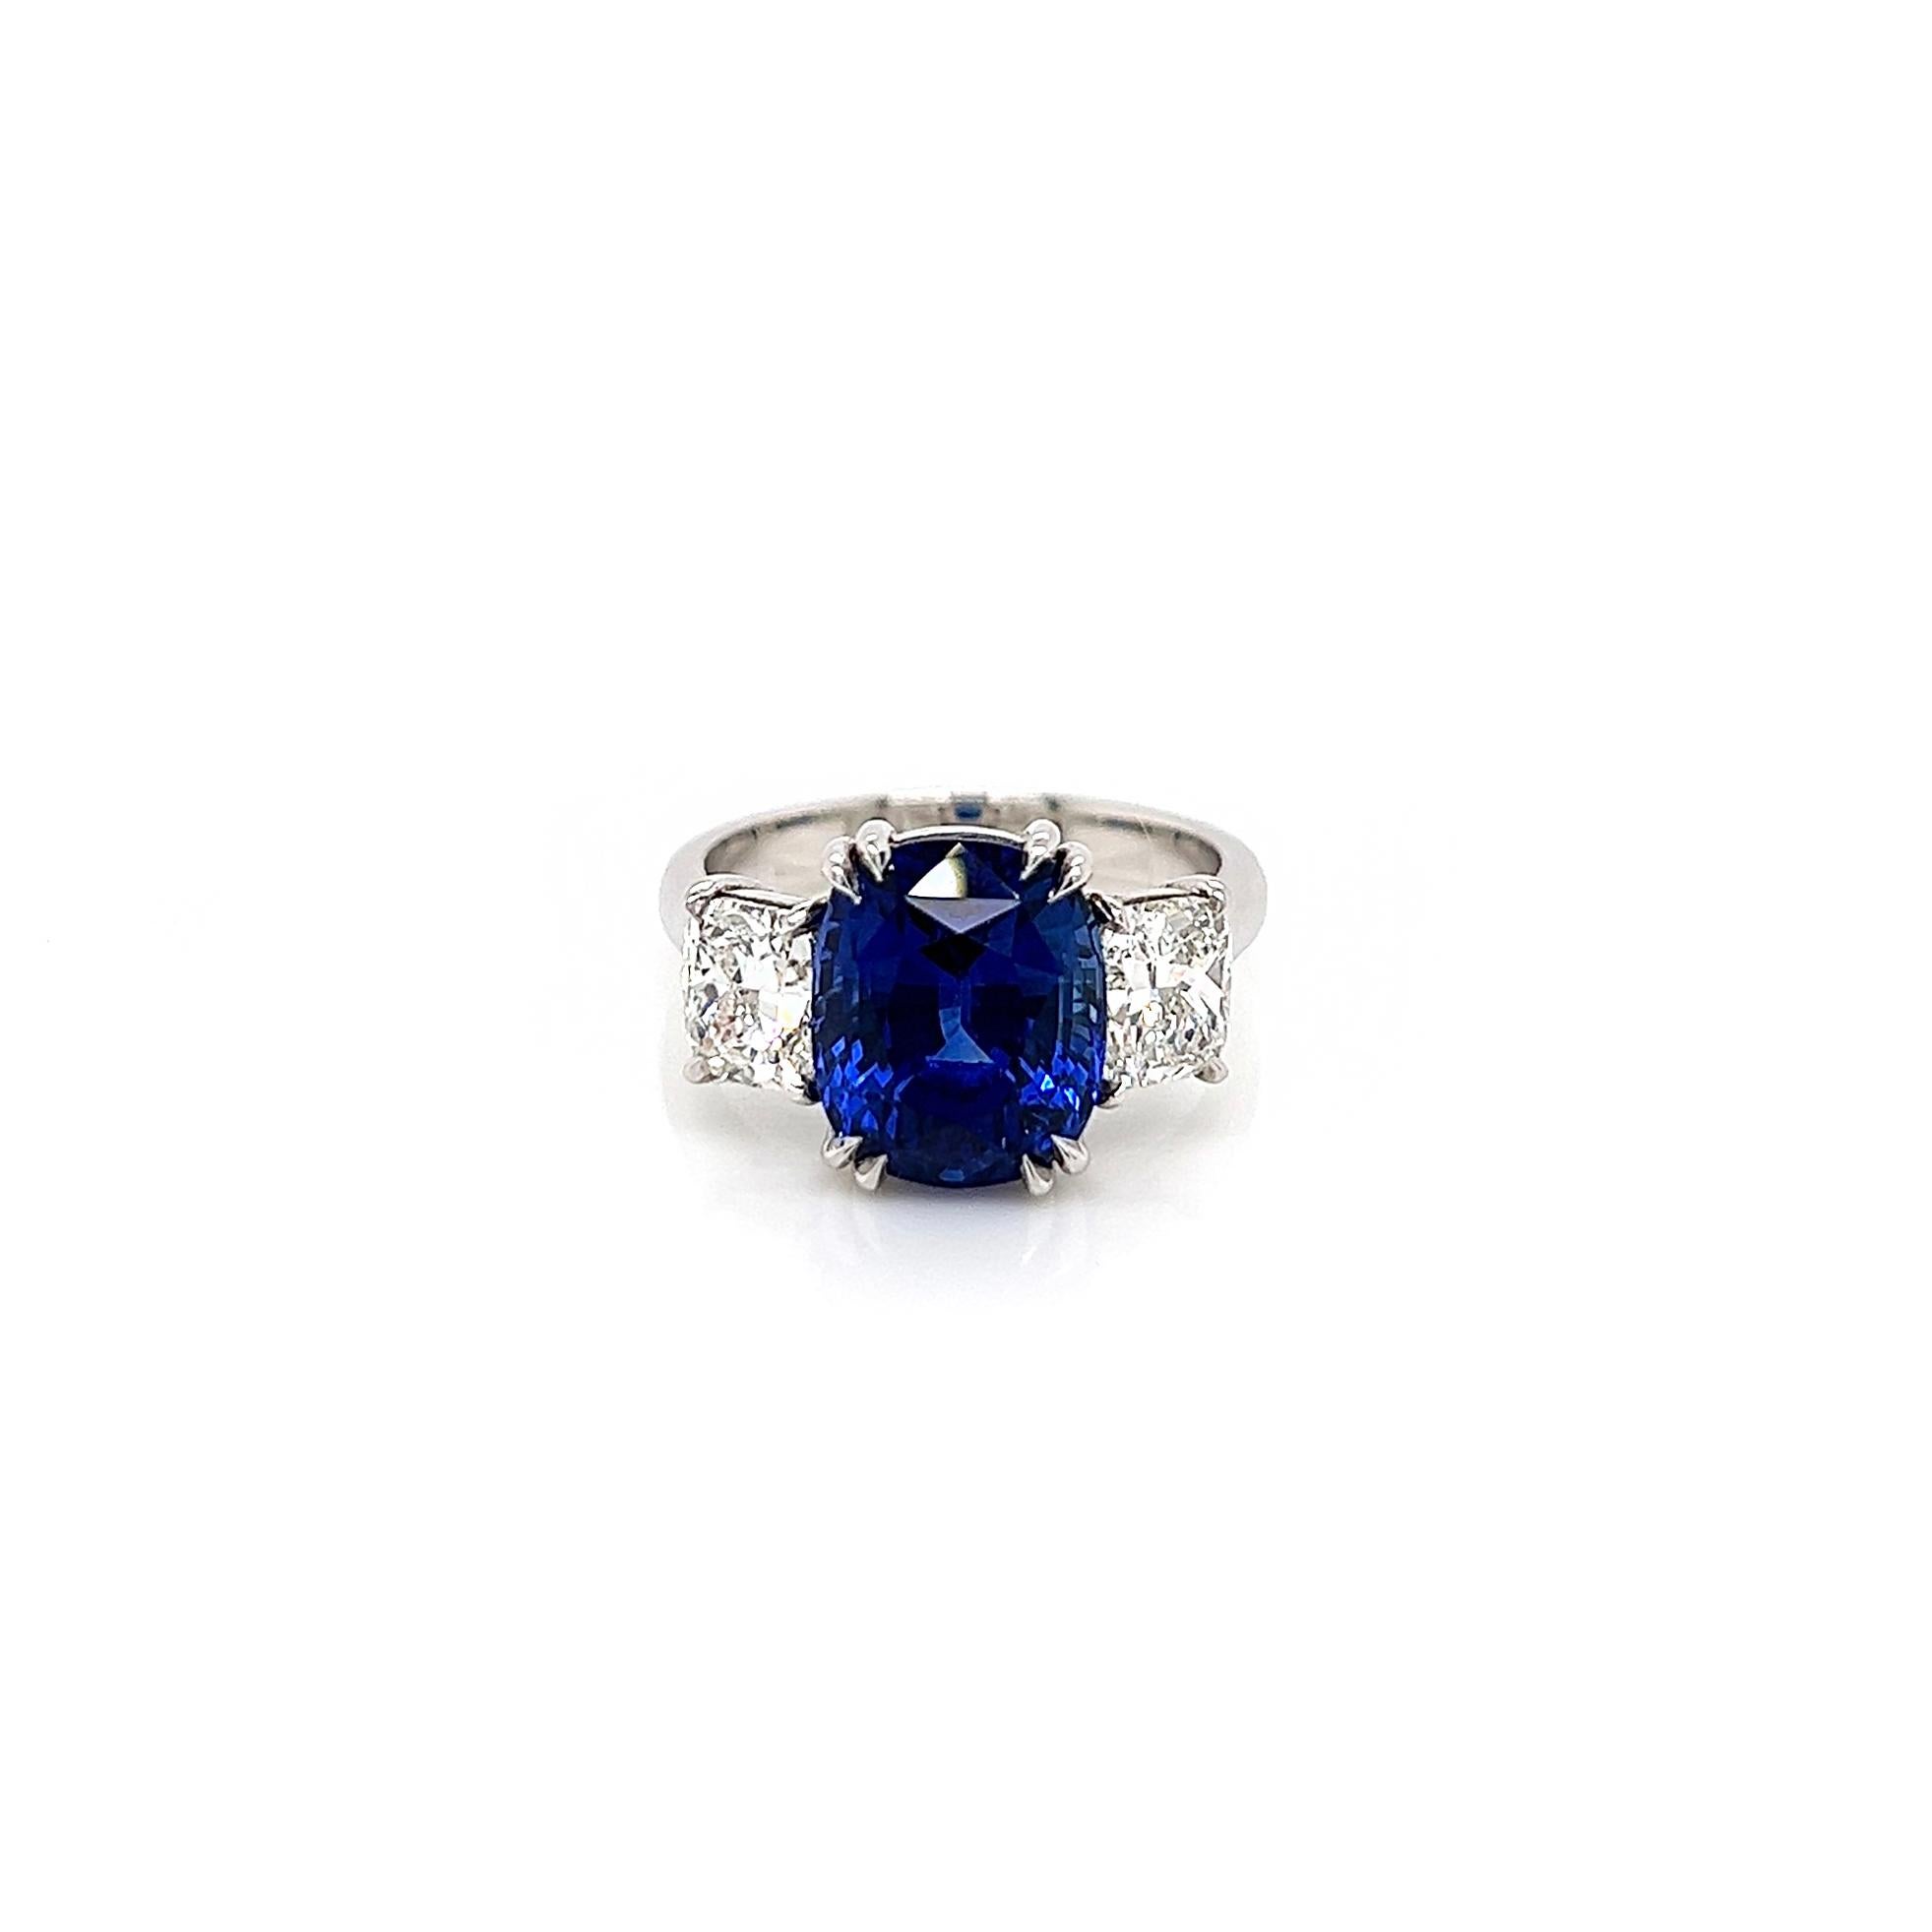 7.87 Total Carat Sapphire and Diamond Ladies Ring. GIA Certified.

-Metal Type: Platinum
-6.27 Carat Cushion Cut Natural Blue Sapphire, GIA Certified 
-Sapphire Measurements: 10.62 x 8.77 x 7.45 mm
-0.80 Carat Cushion Cut Natural side Diamond. GIA